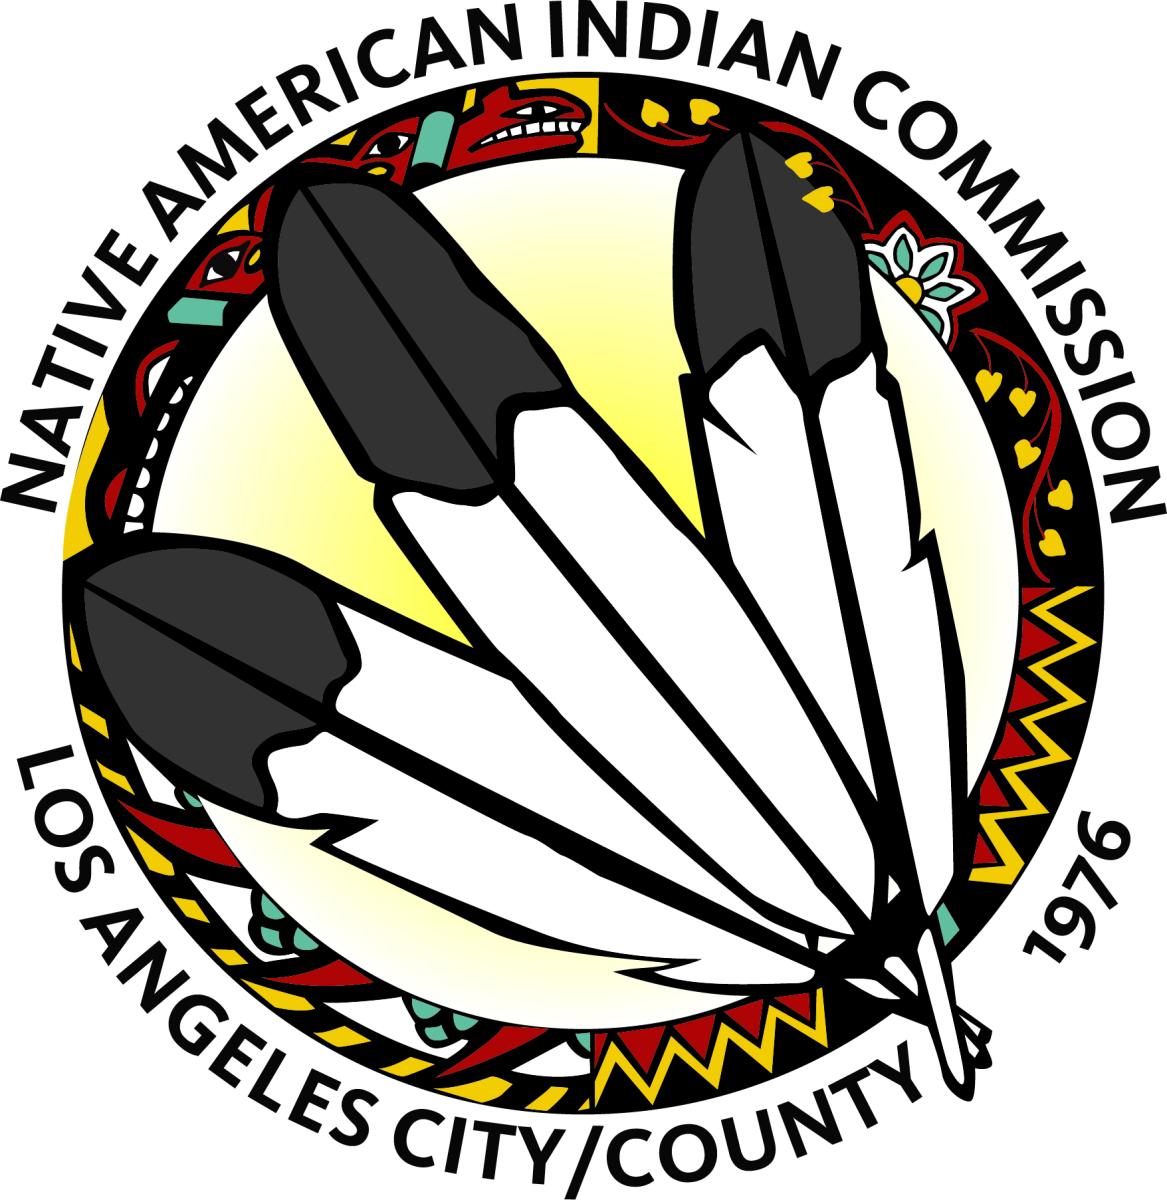 LA City/County Native American Indian Commission logo